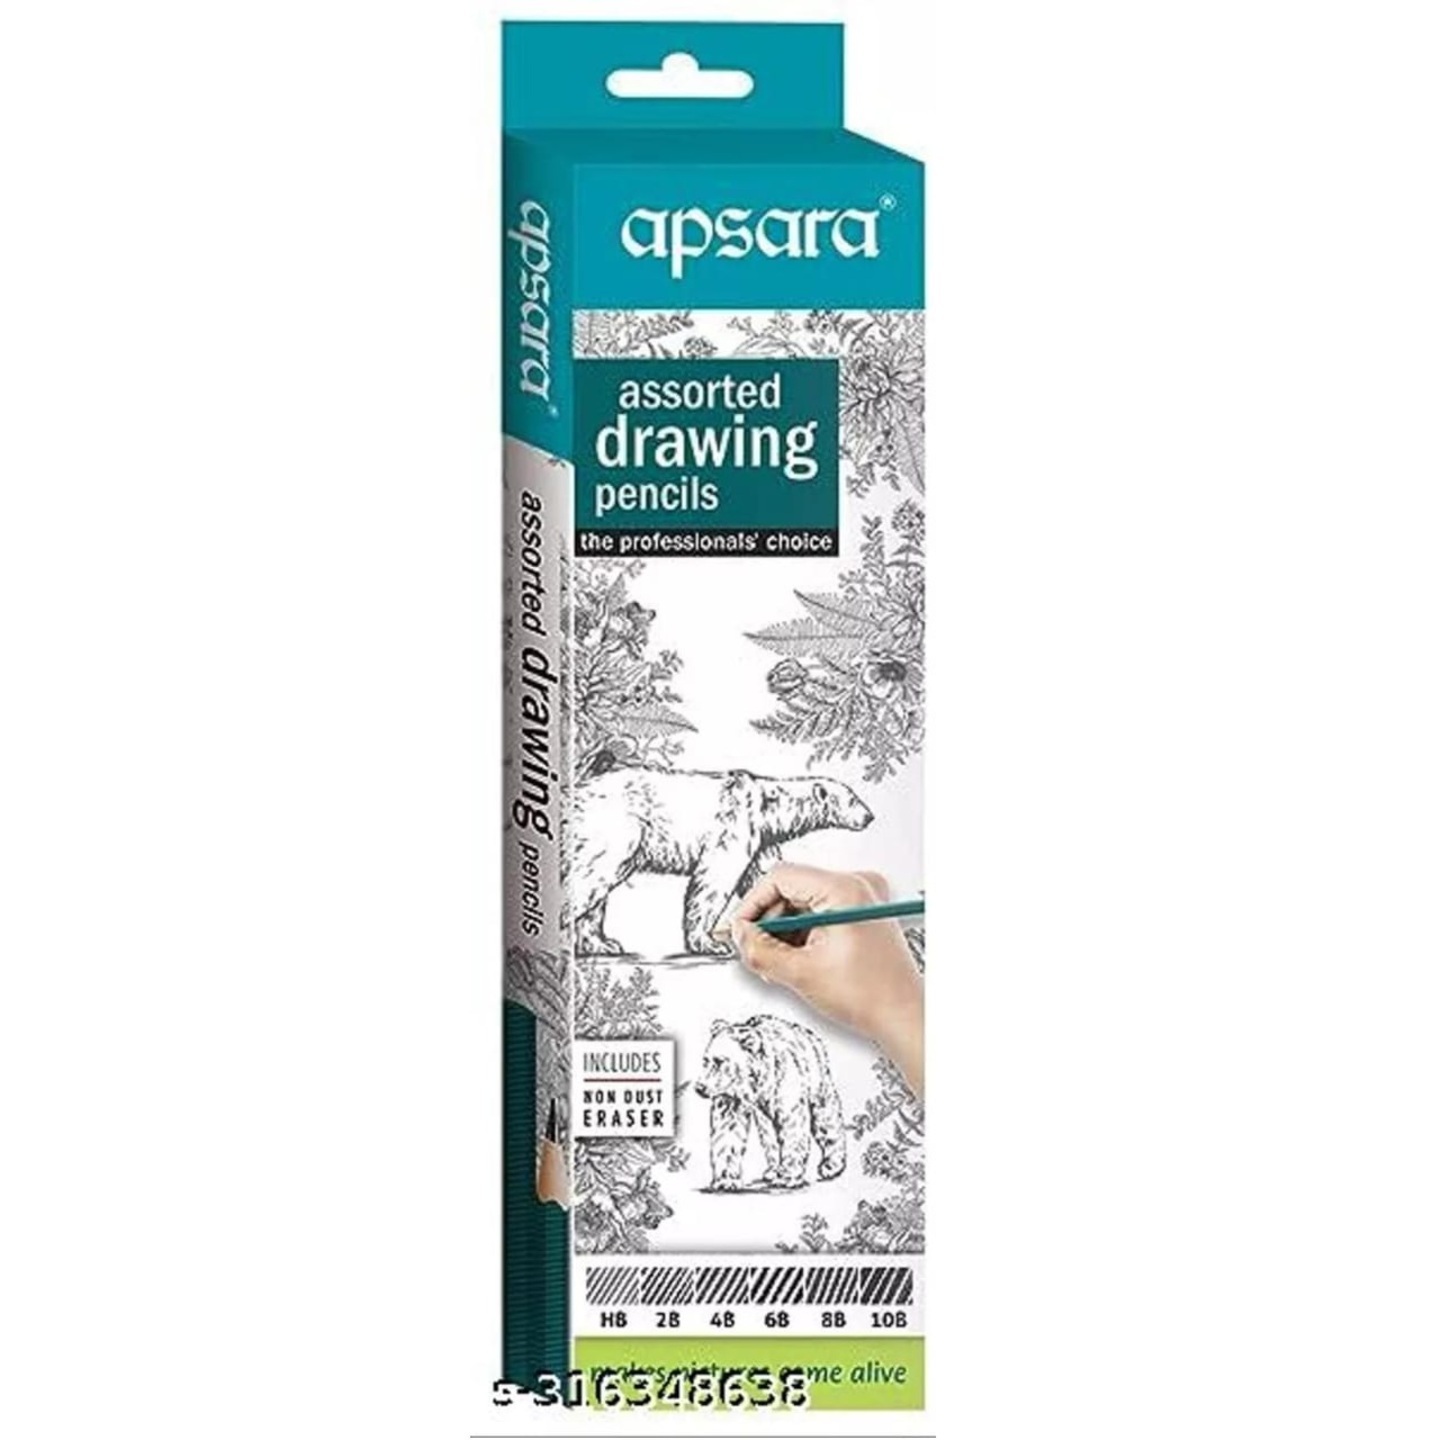 Apsara drawig pencil pack of 6 with free eraser (HB 2B 4B 6B 8B 10B)